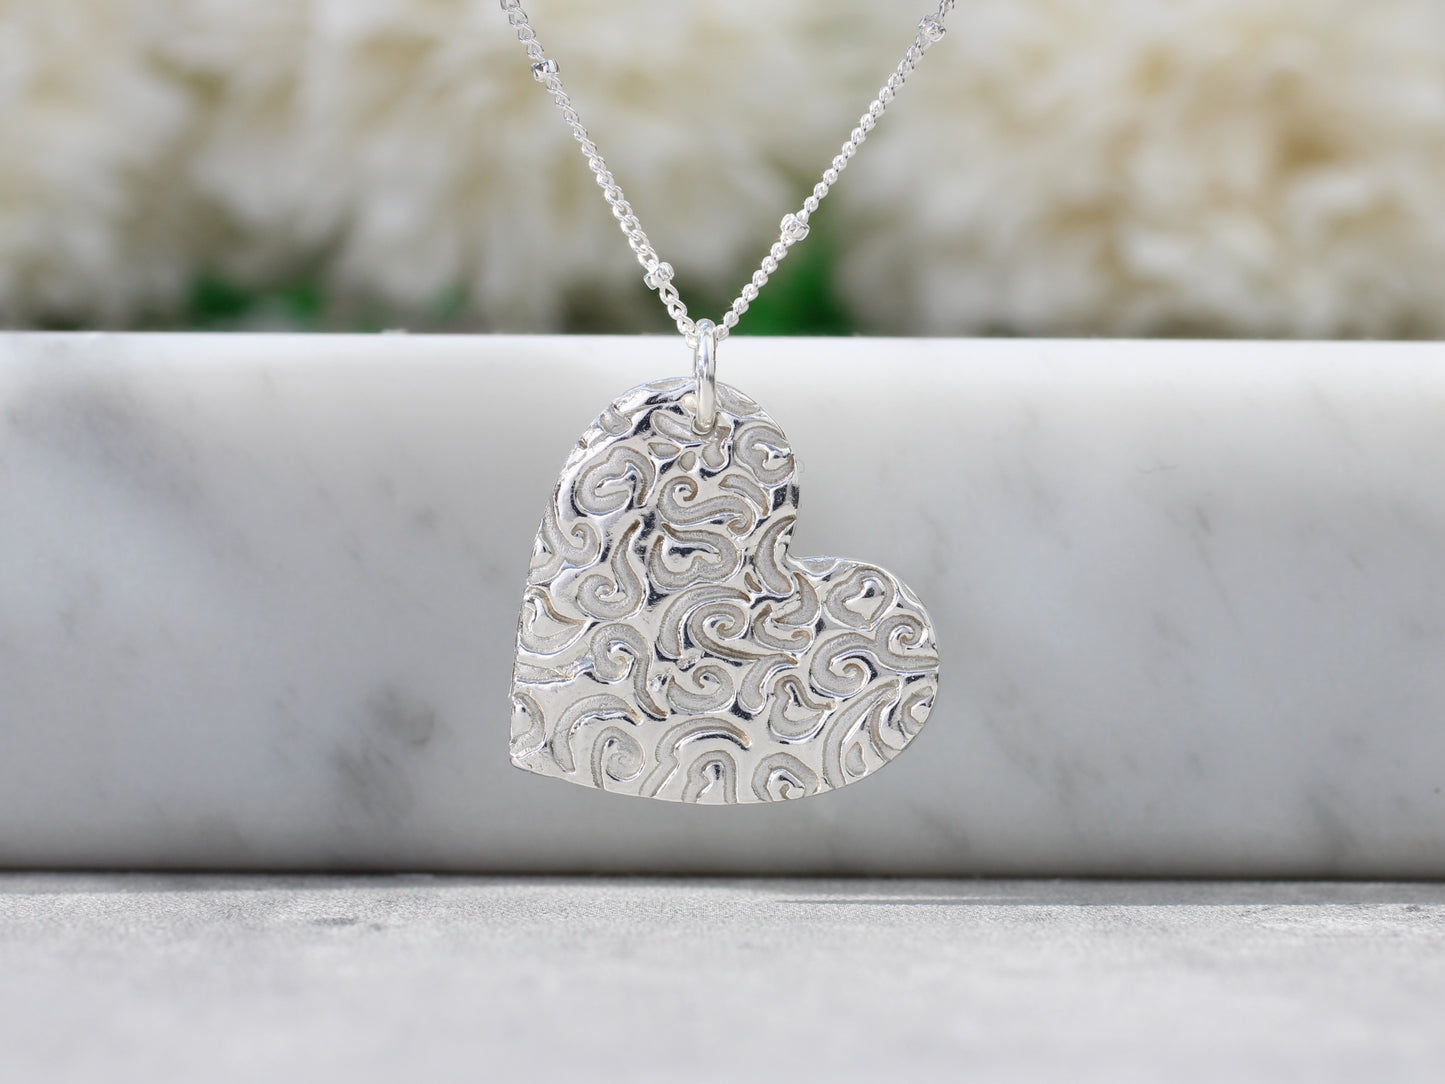 Pure silver heart pendant necklace.